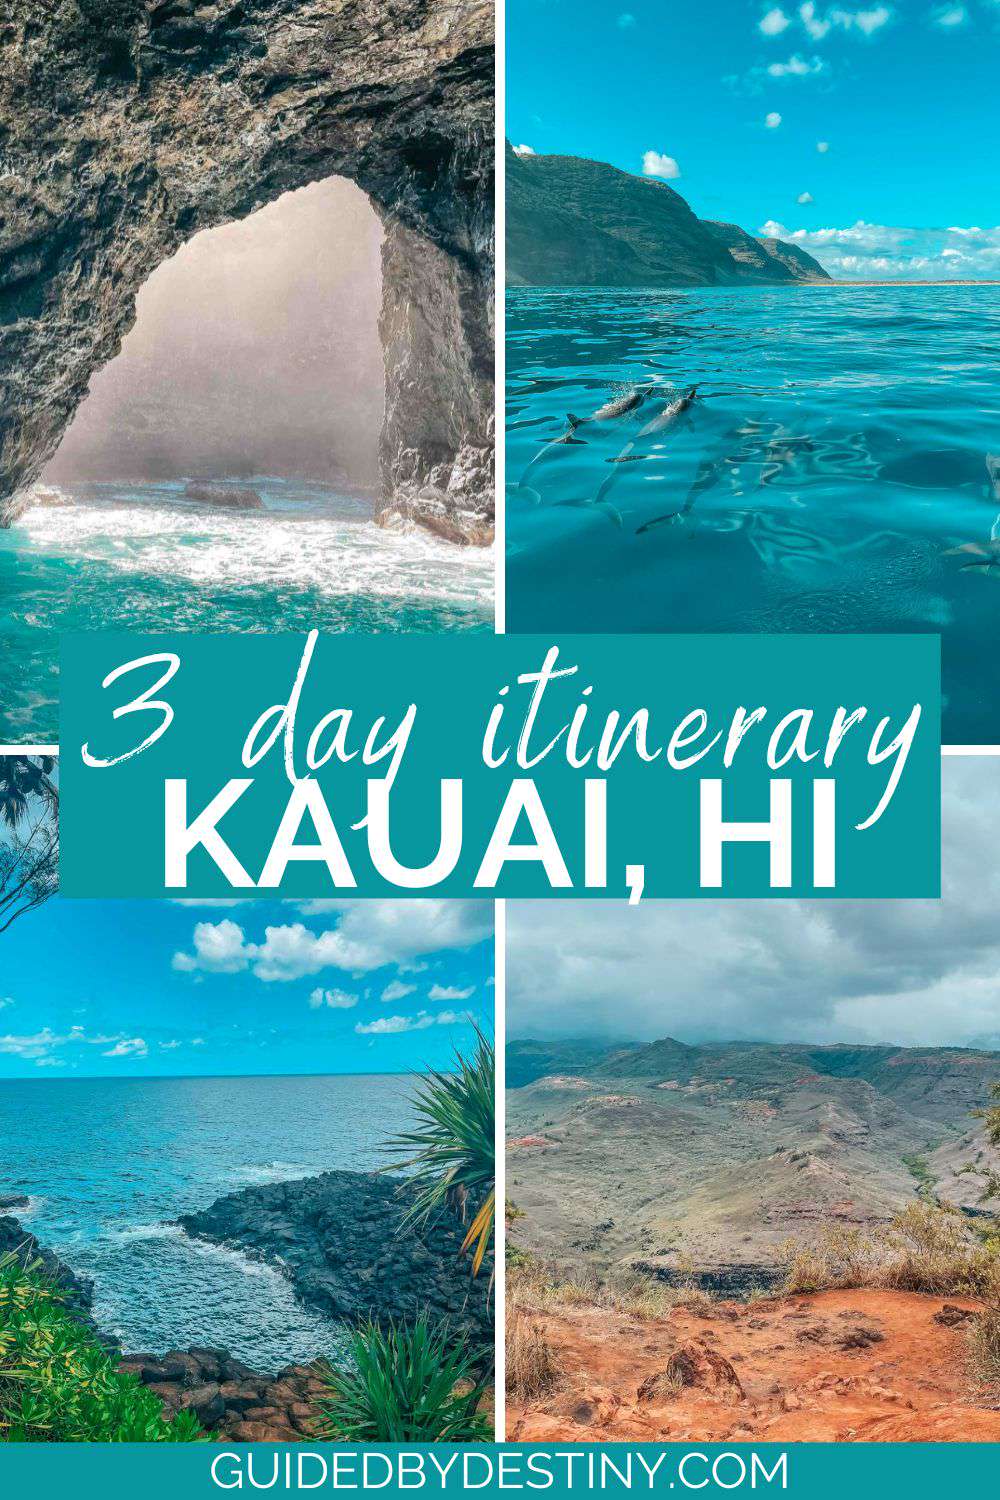 3 day itinerary for Kauai Hawaii